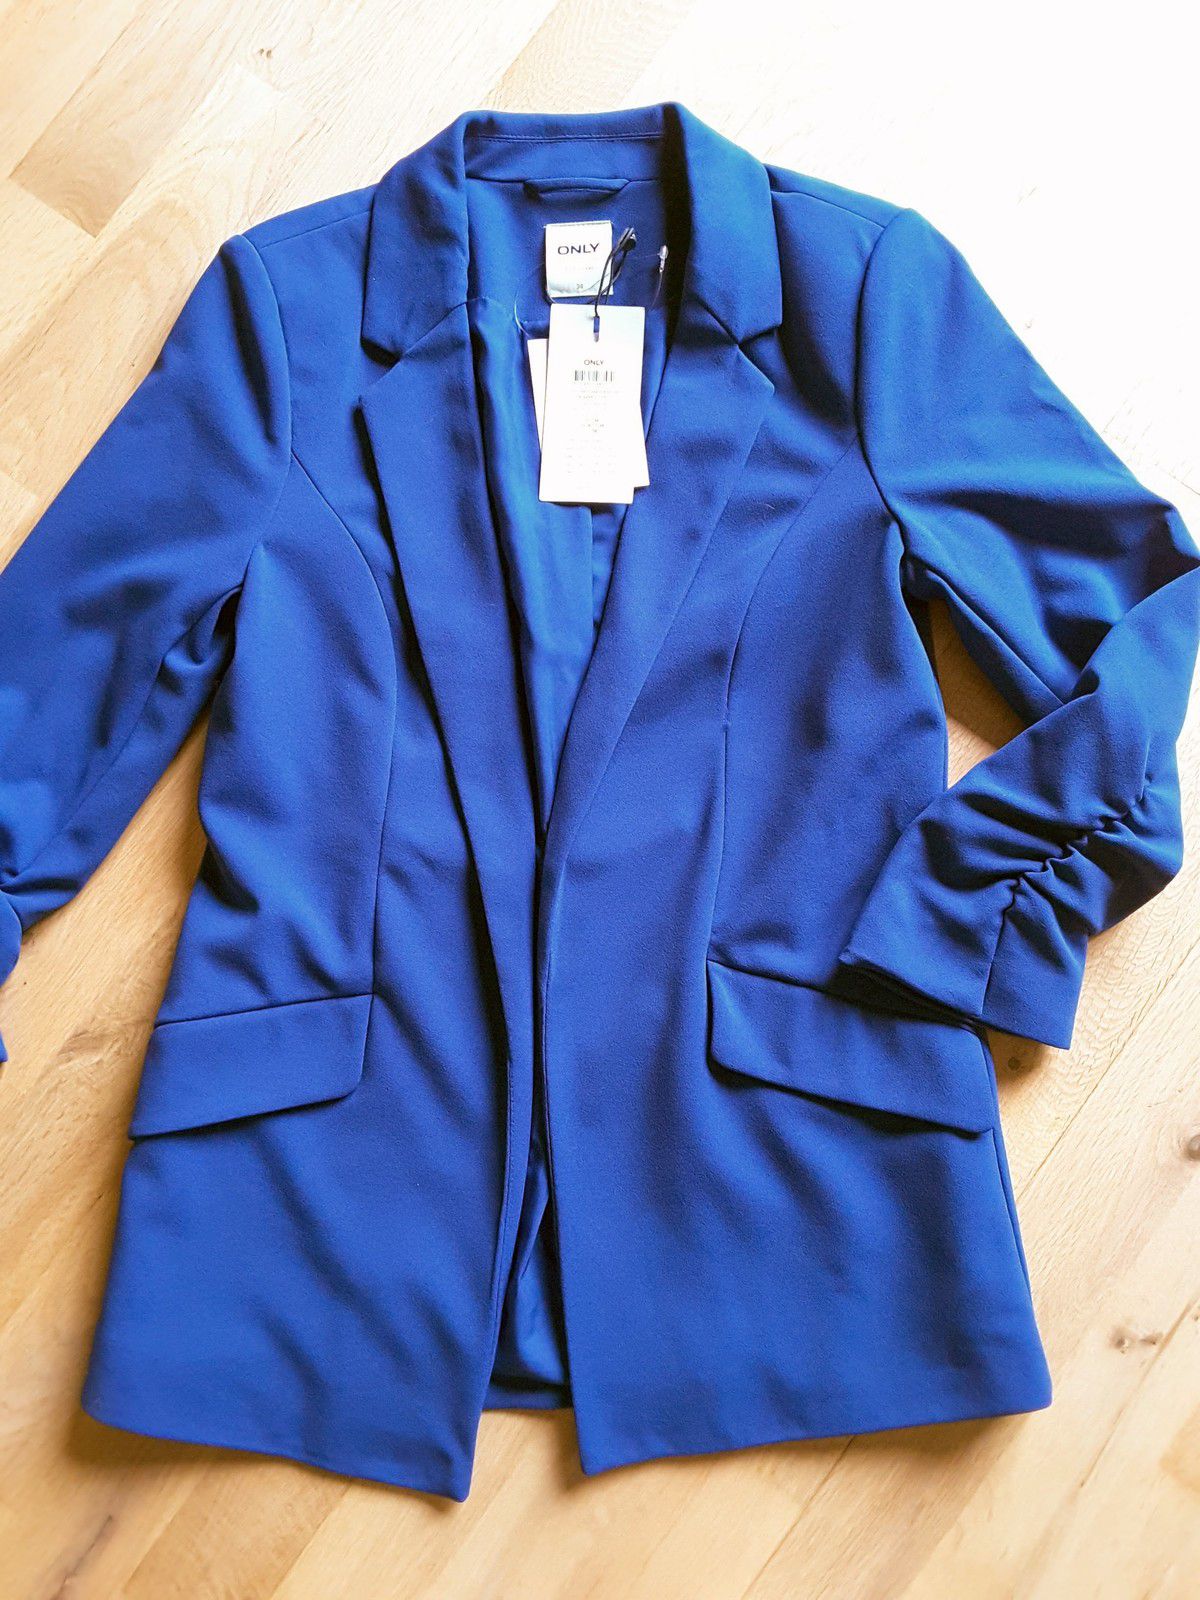 blazer Carolina 3/4 Manzarine Bleu - Only clic and fit missbonsplansdunet personal shopper styliste box vêtements 